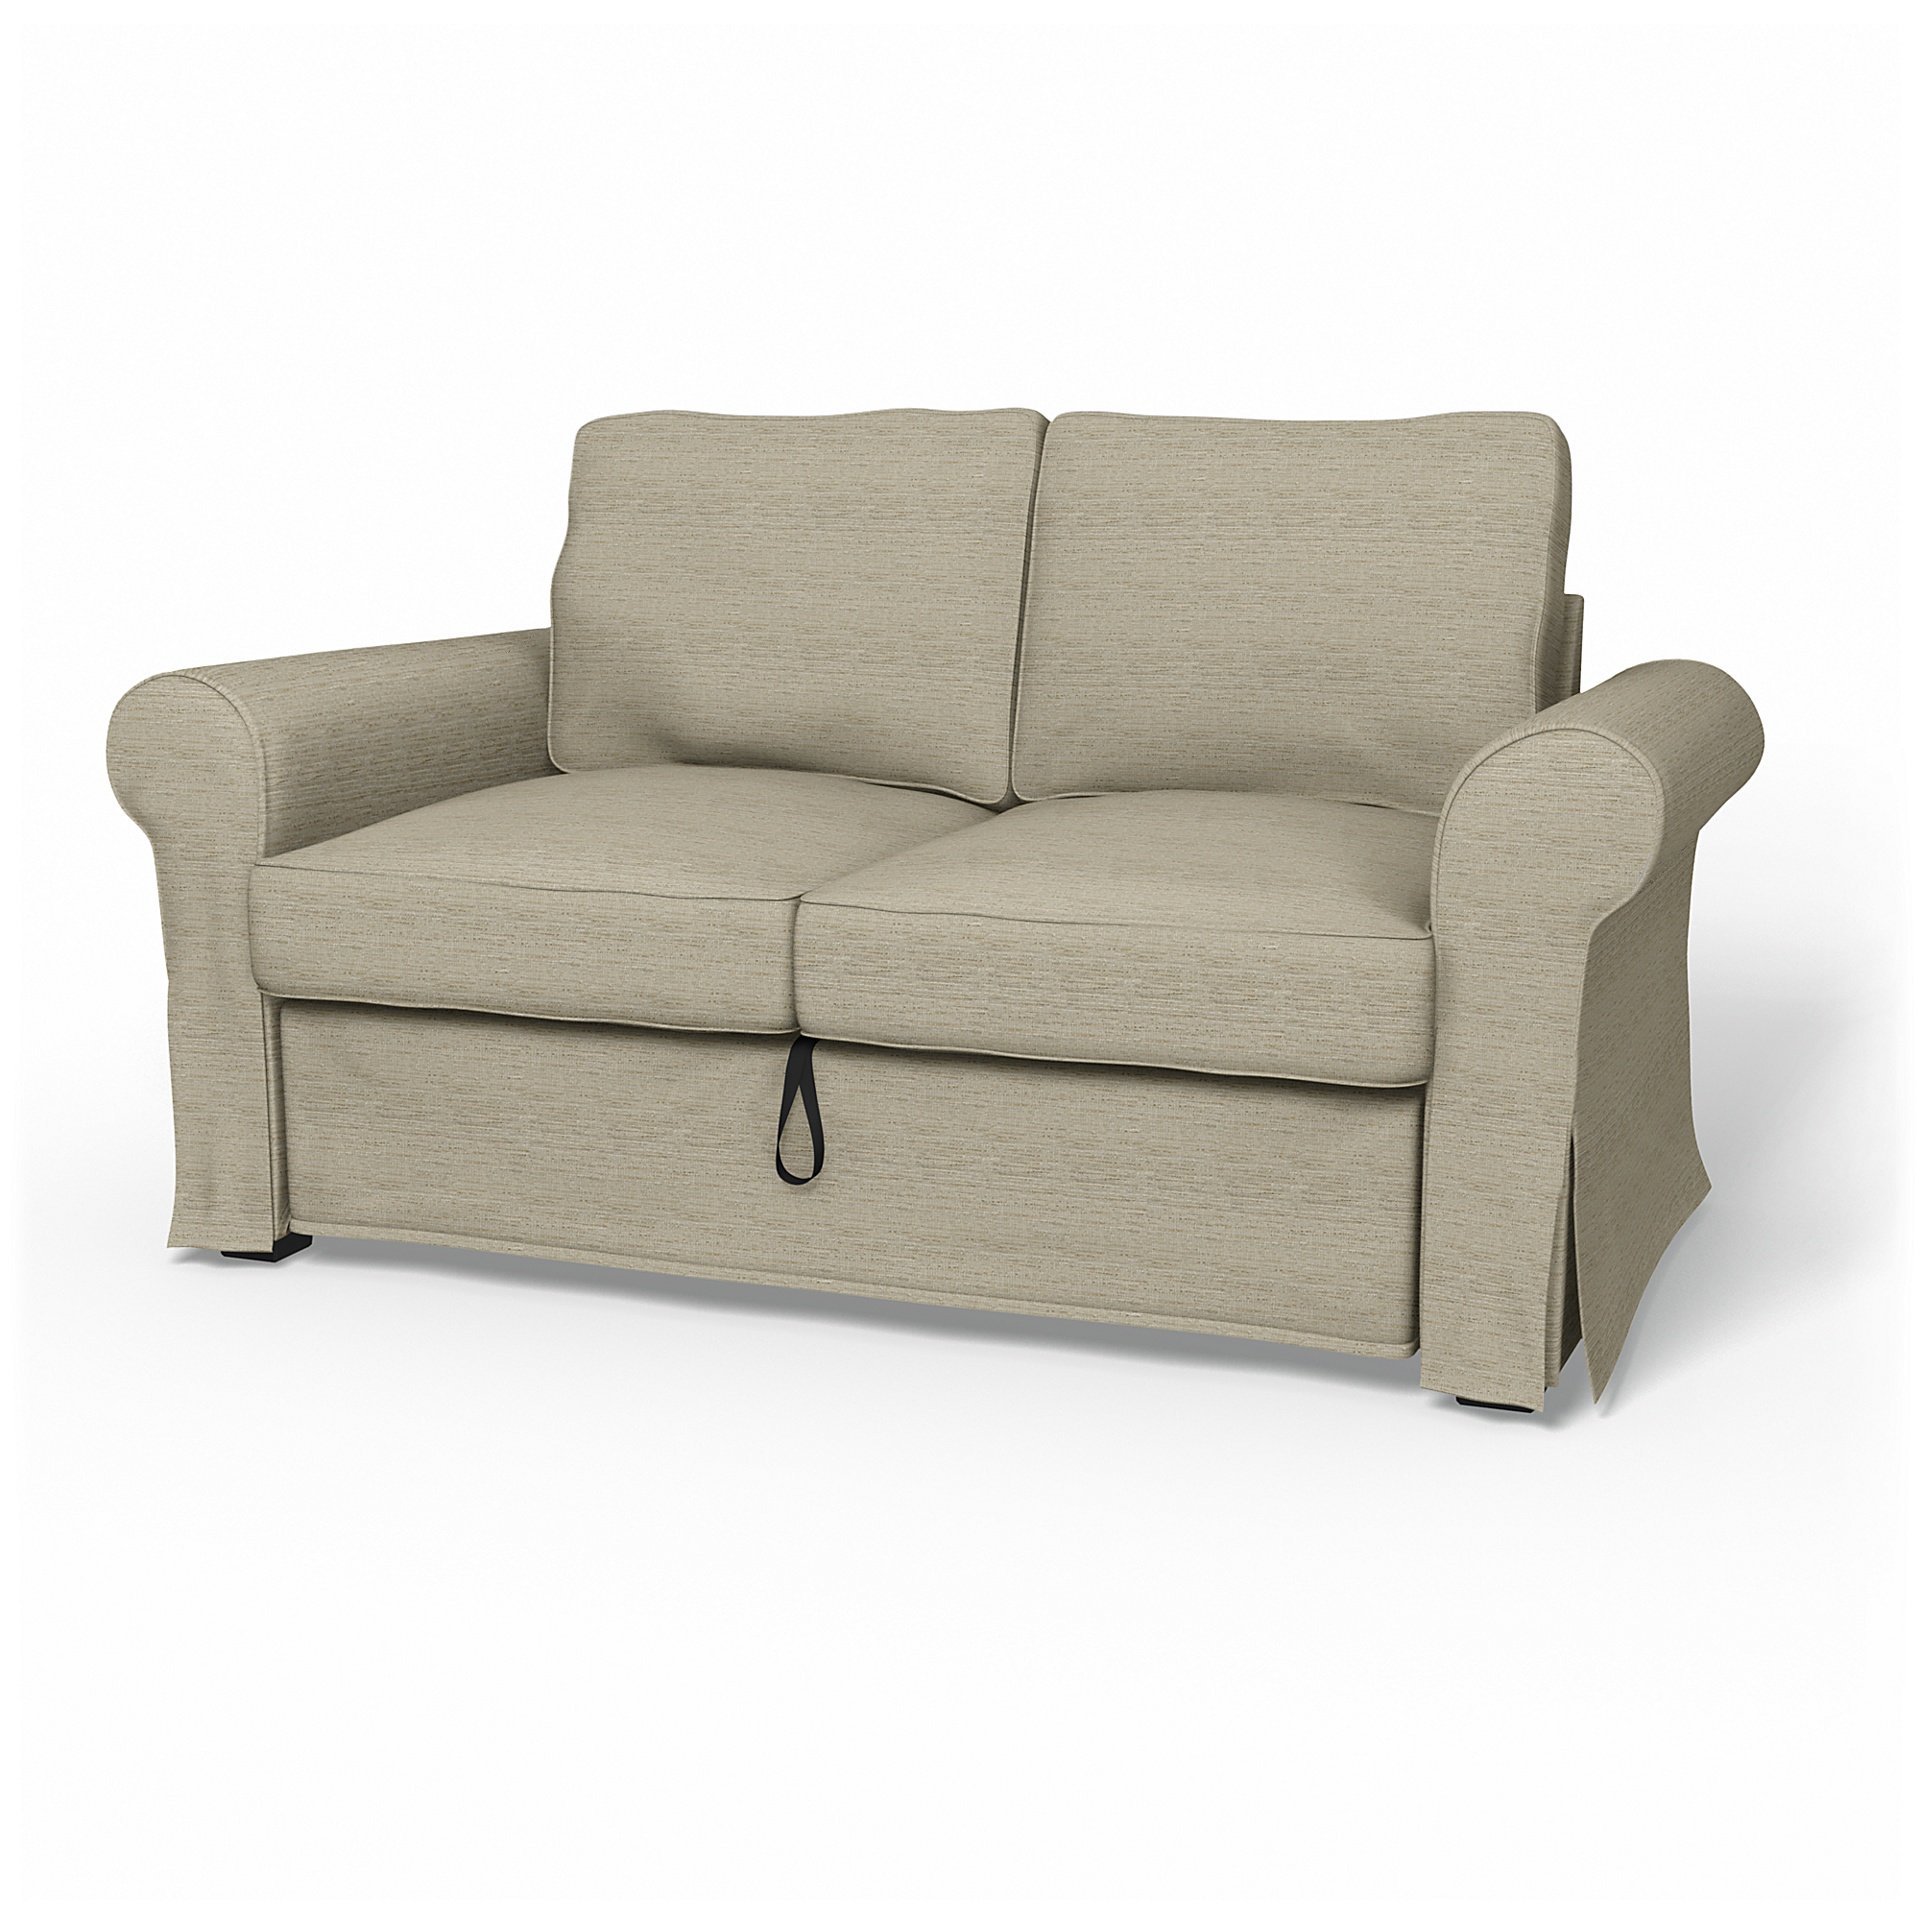 IKEA - Backabro 2 Seater Sofa Bed Cover, Light Sand, Boucle & Texture - Bemz